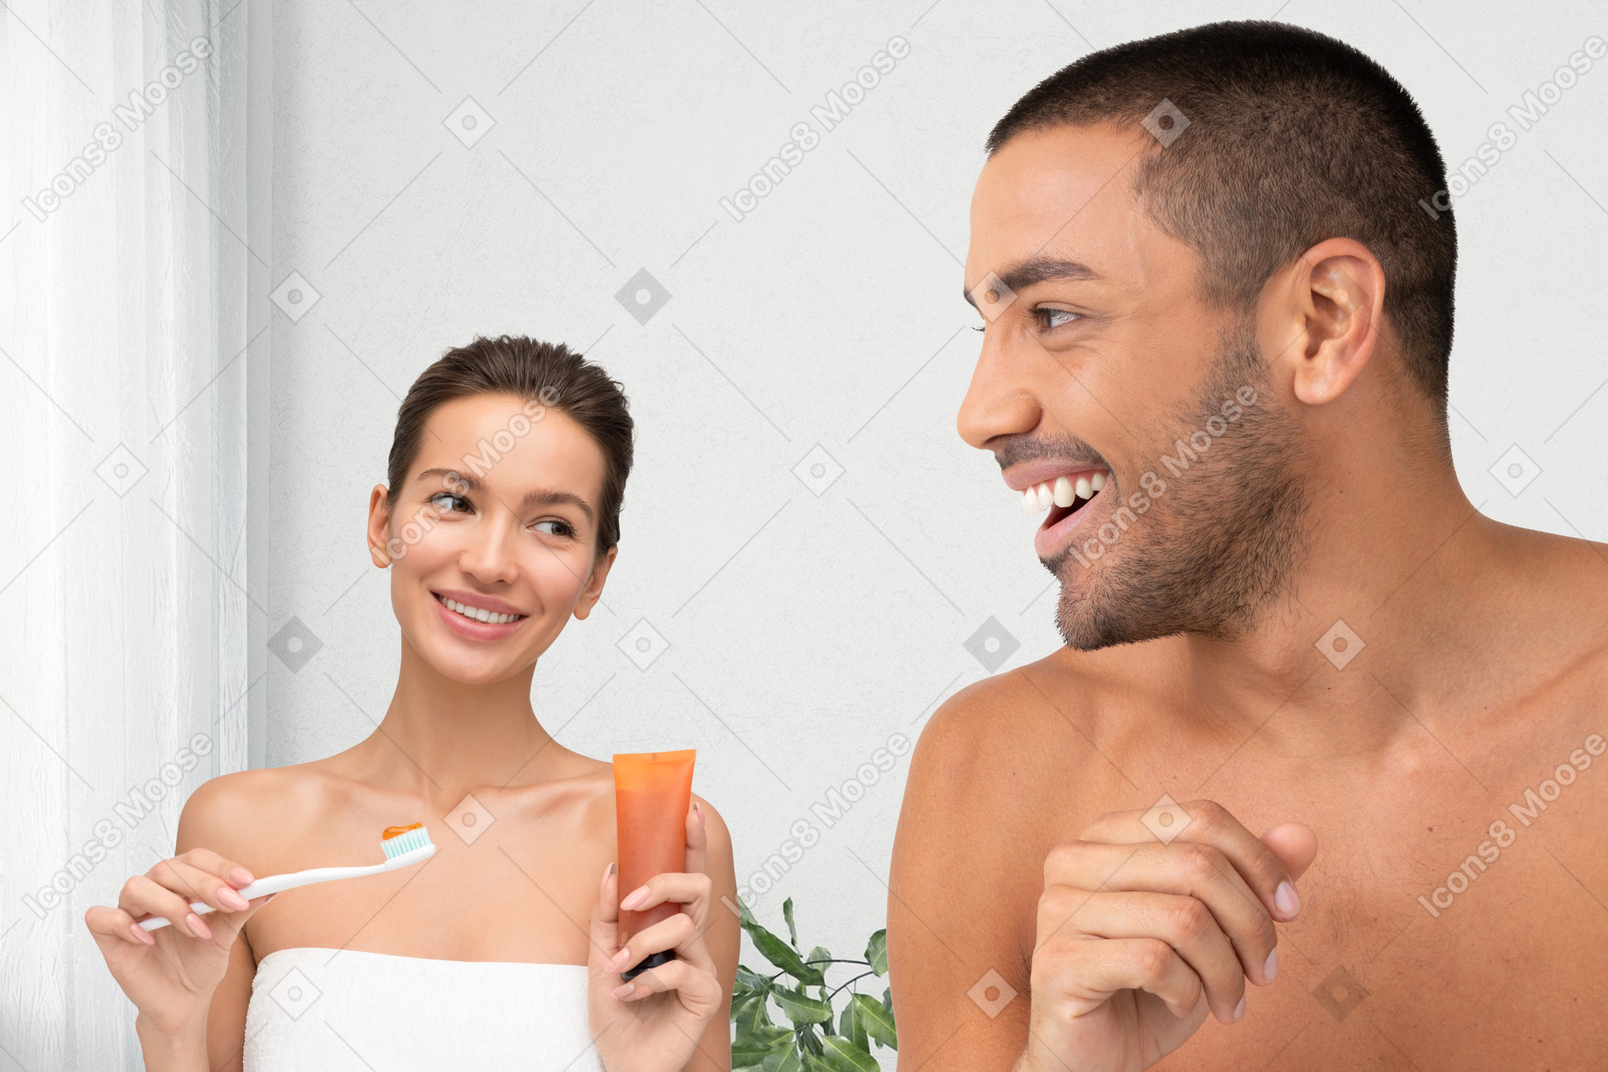 Man and woman brushing teeth